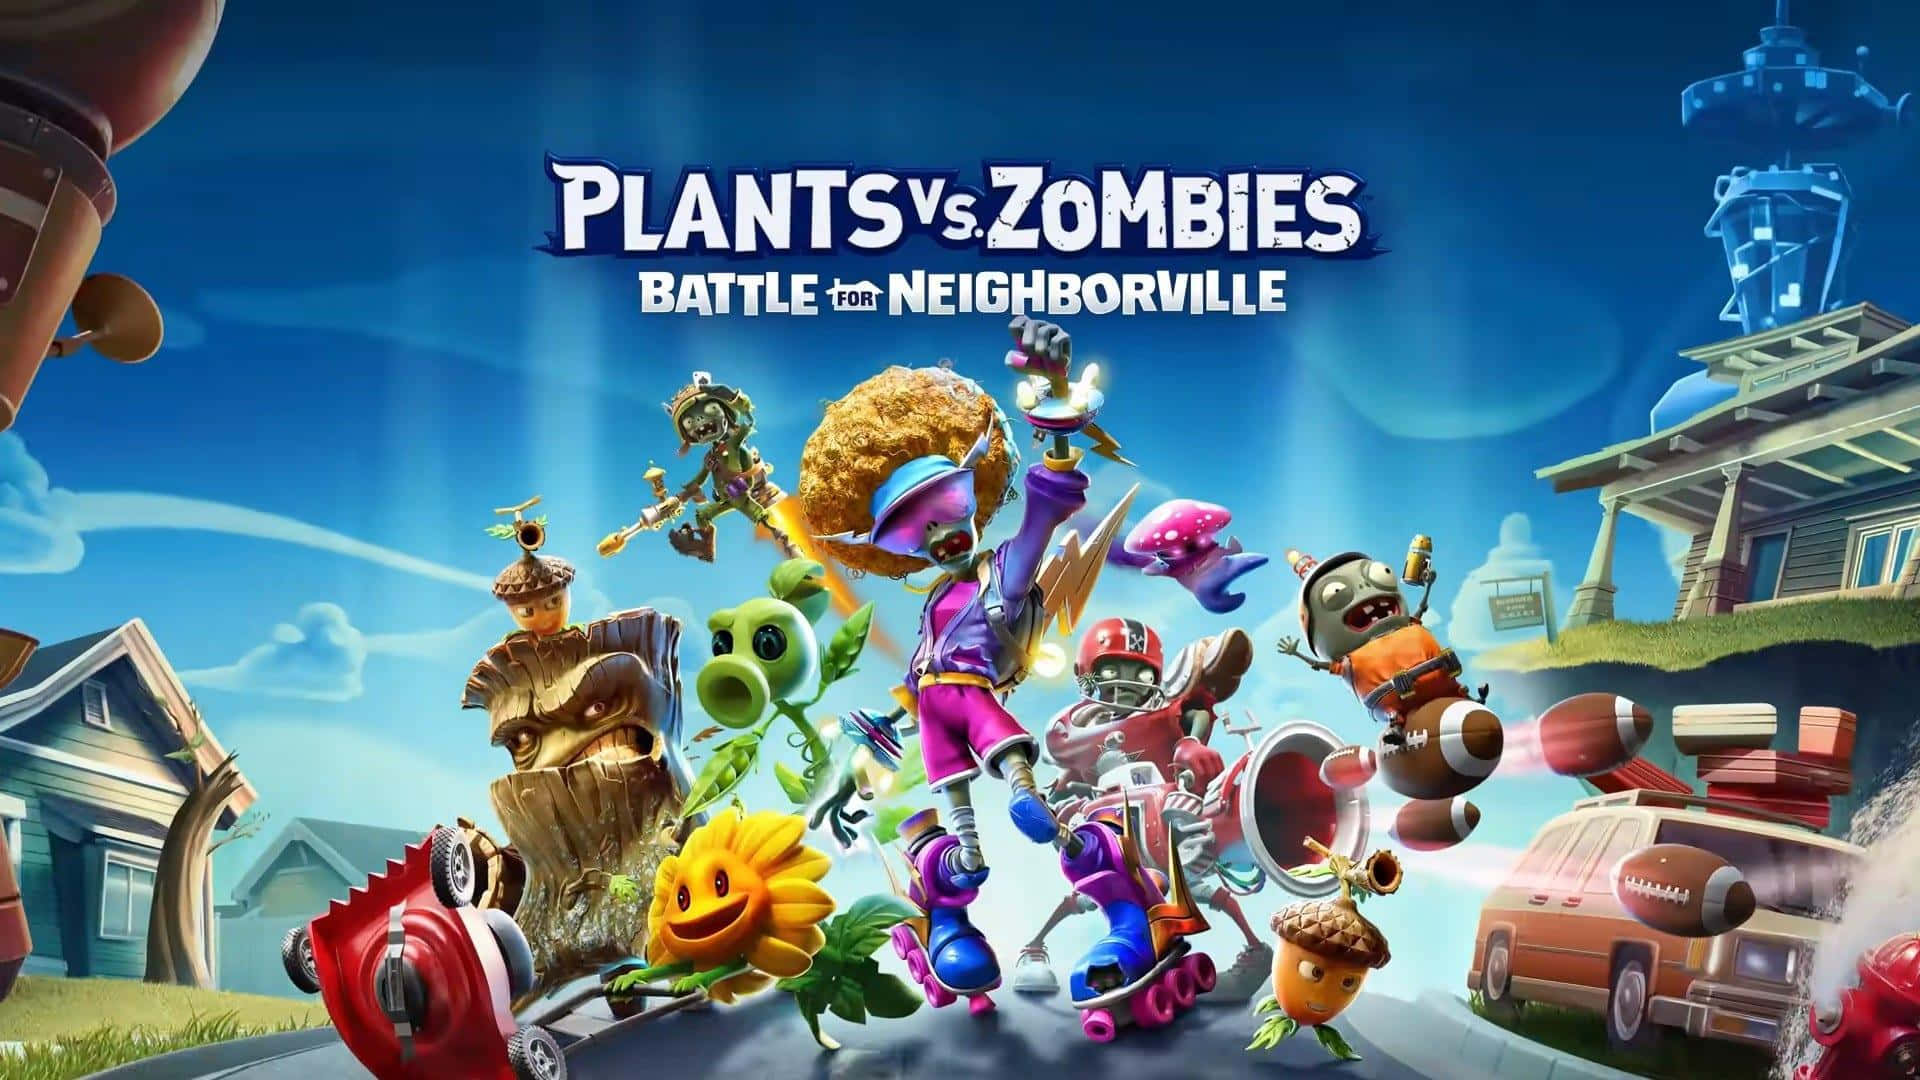 Plants vs zombies битва за нейборвиль не запускается в стиме фото 102